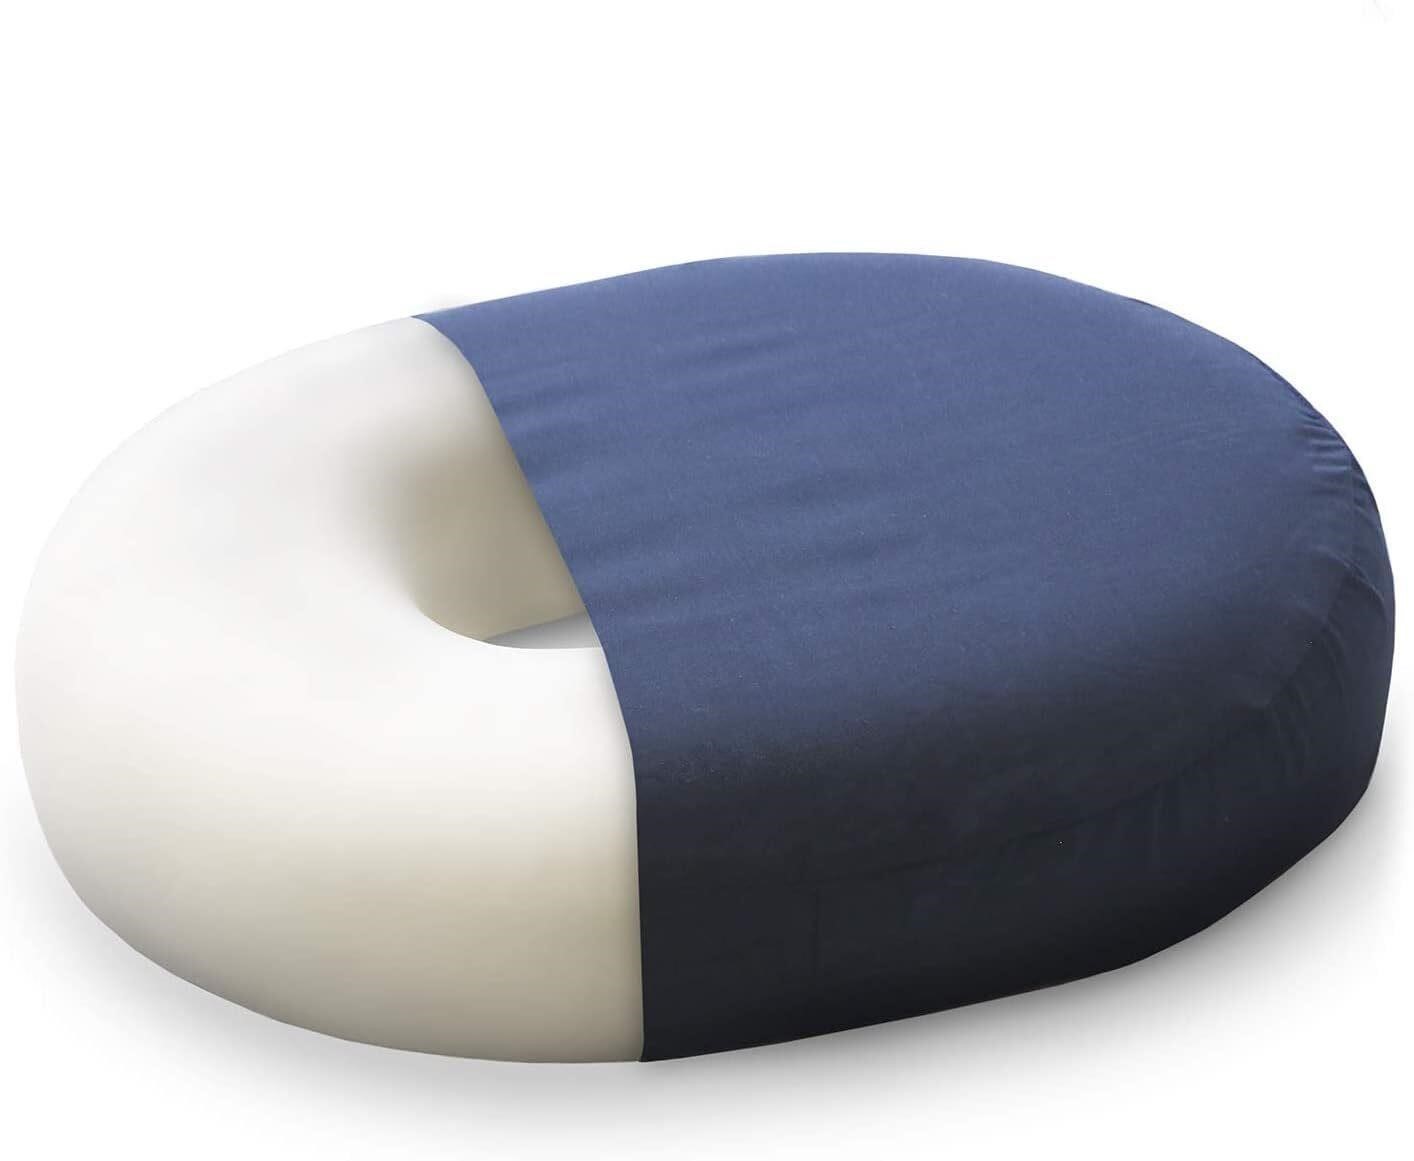 DMI Donut Pillow  16x13x3  Pain Relief  Navy